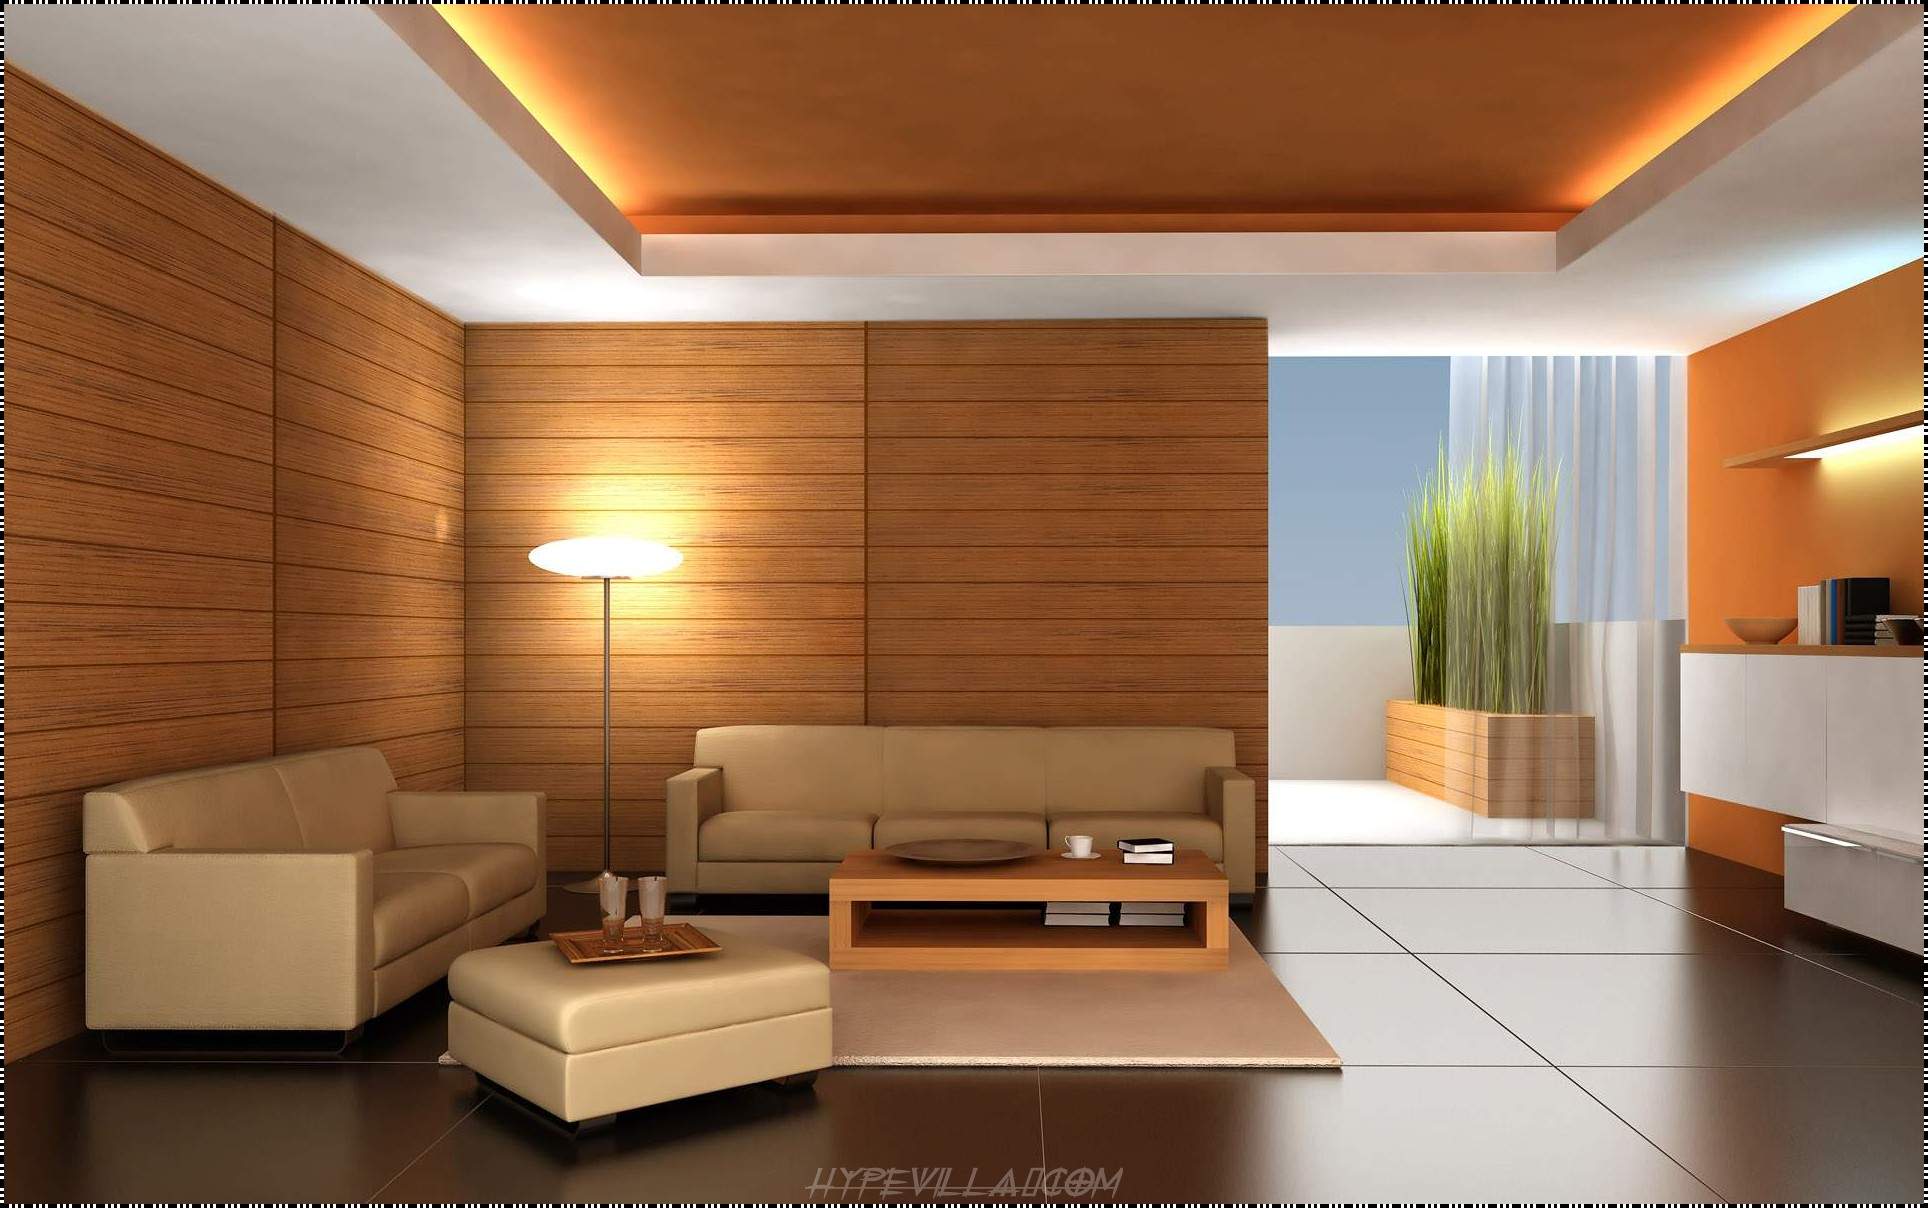 Room Home Design Interior Ideas With Wallpaper Stylish Designs